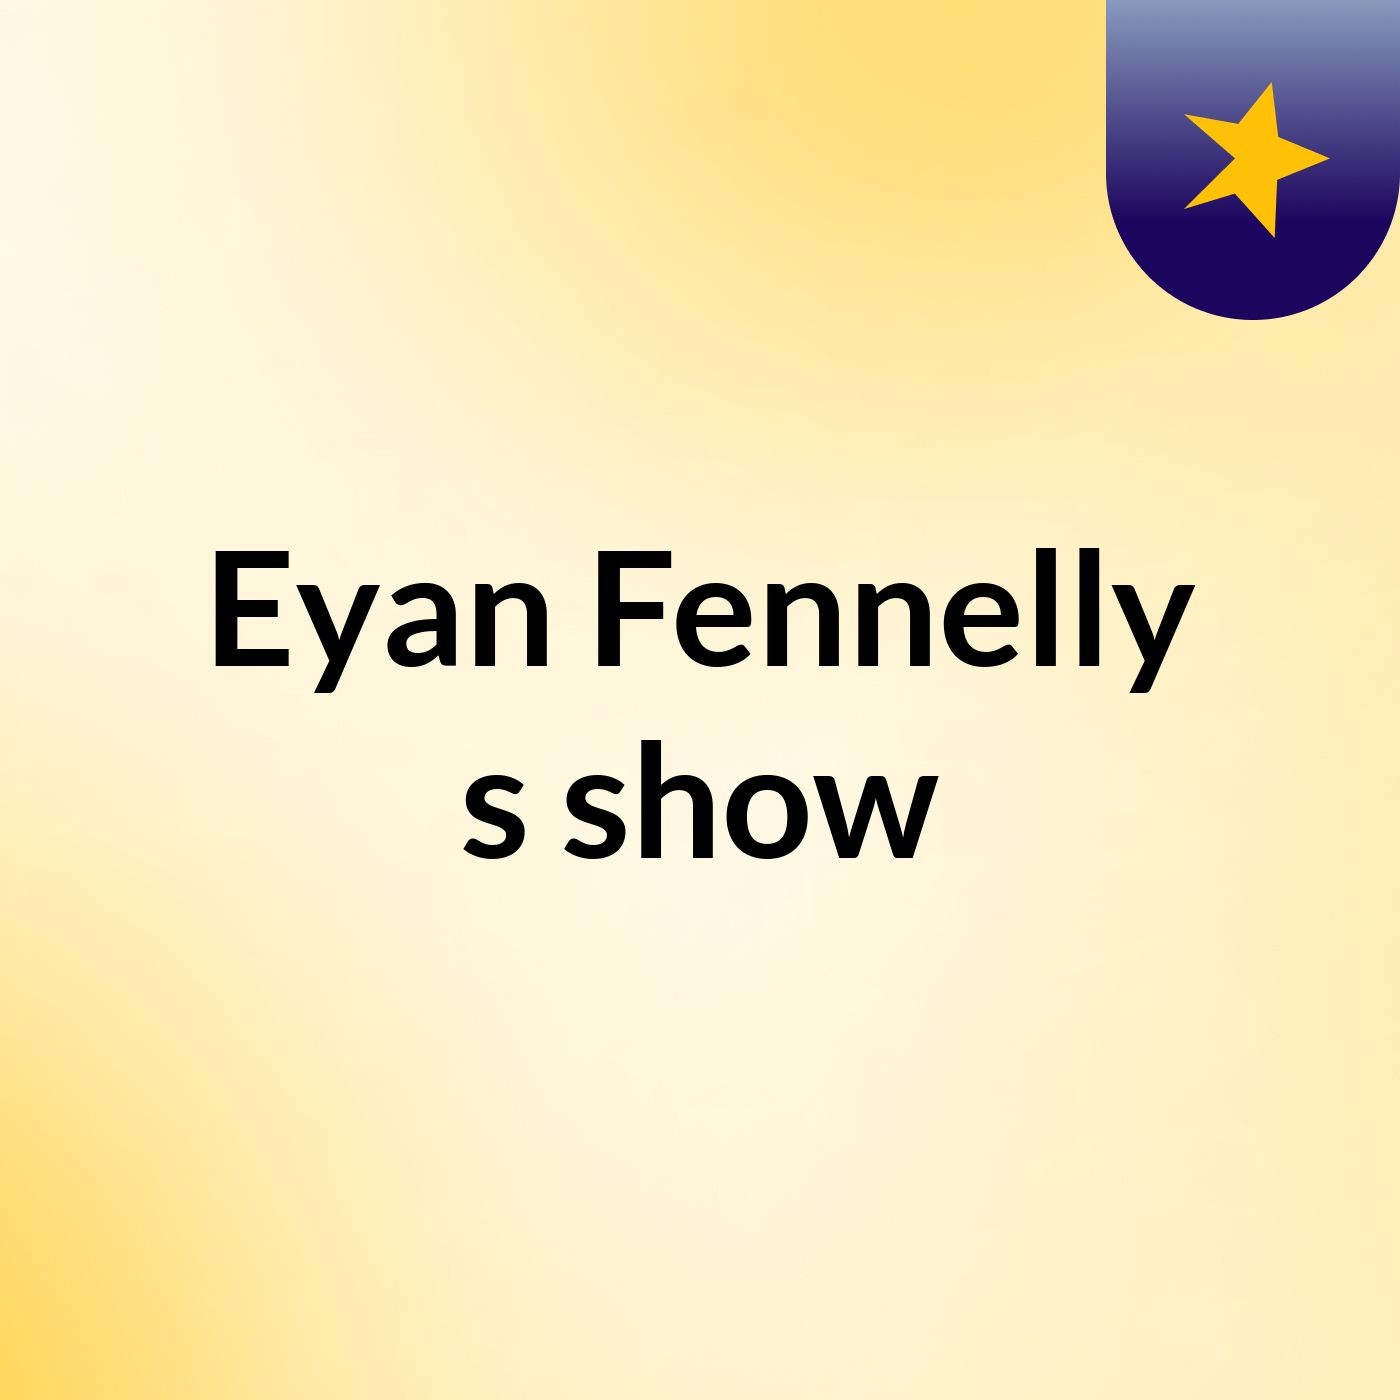 Eyan Fennelly's show